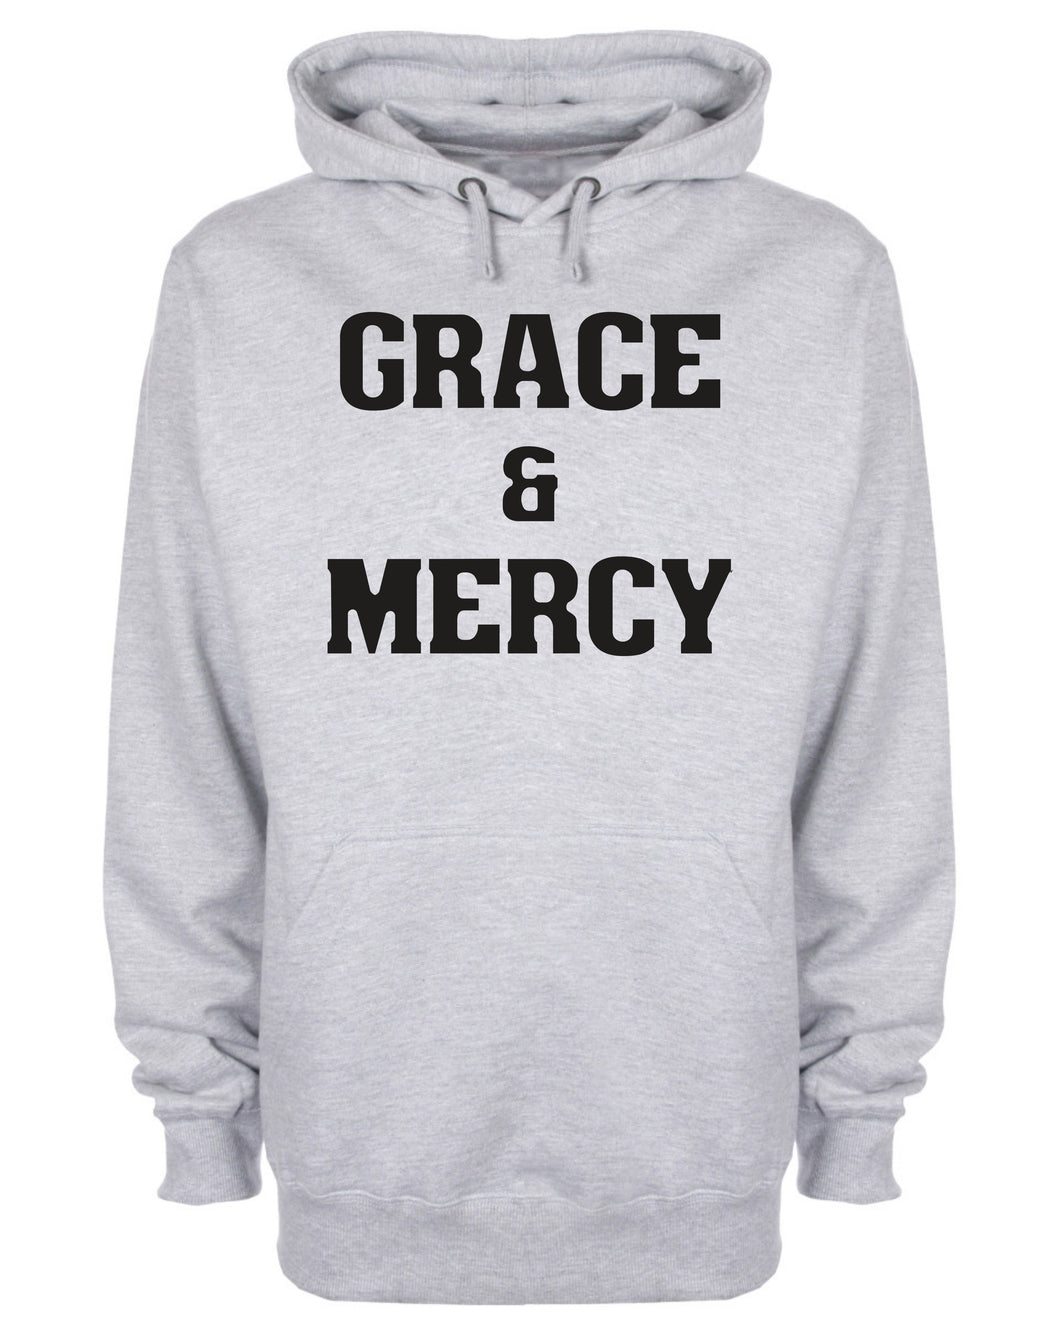 Grace and Mercy Hoodie Christian Sweatshirt